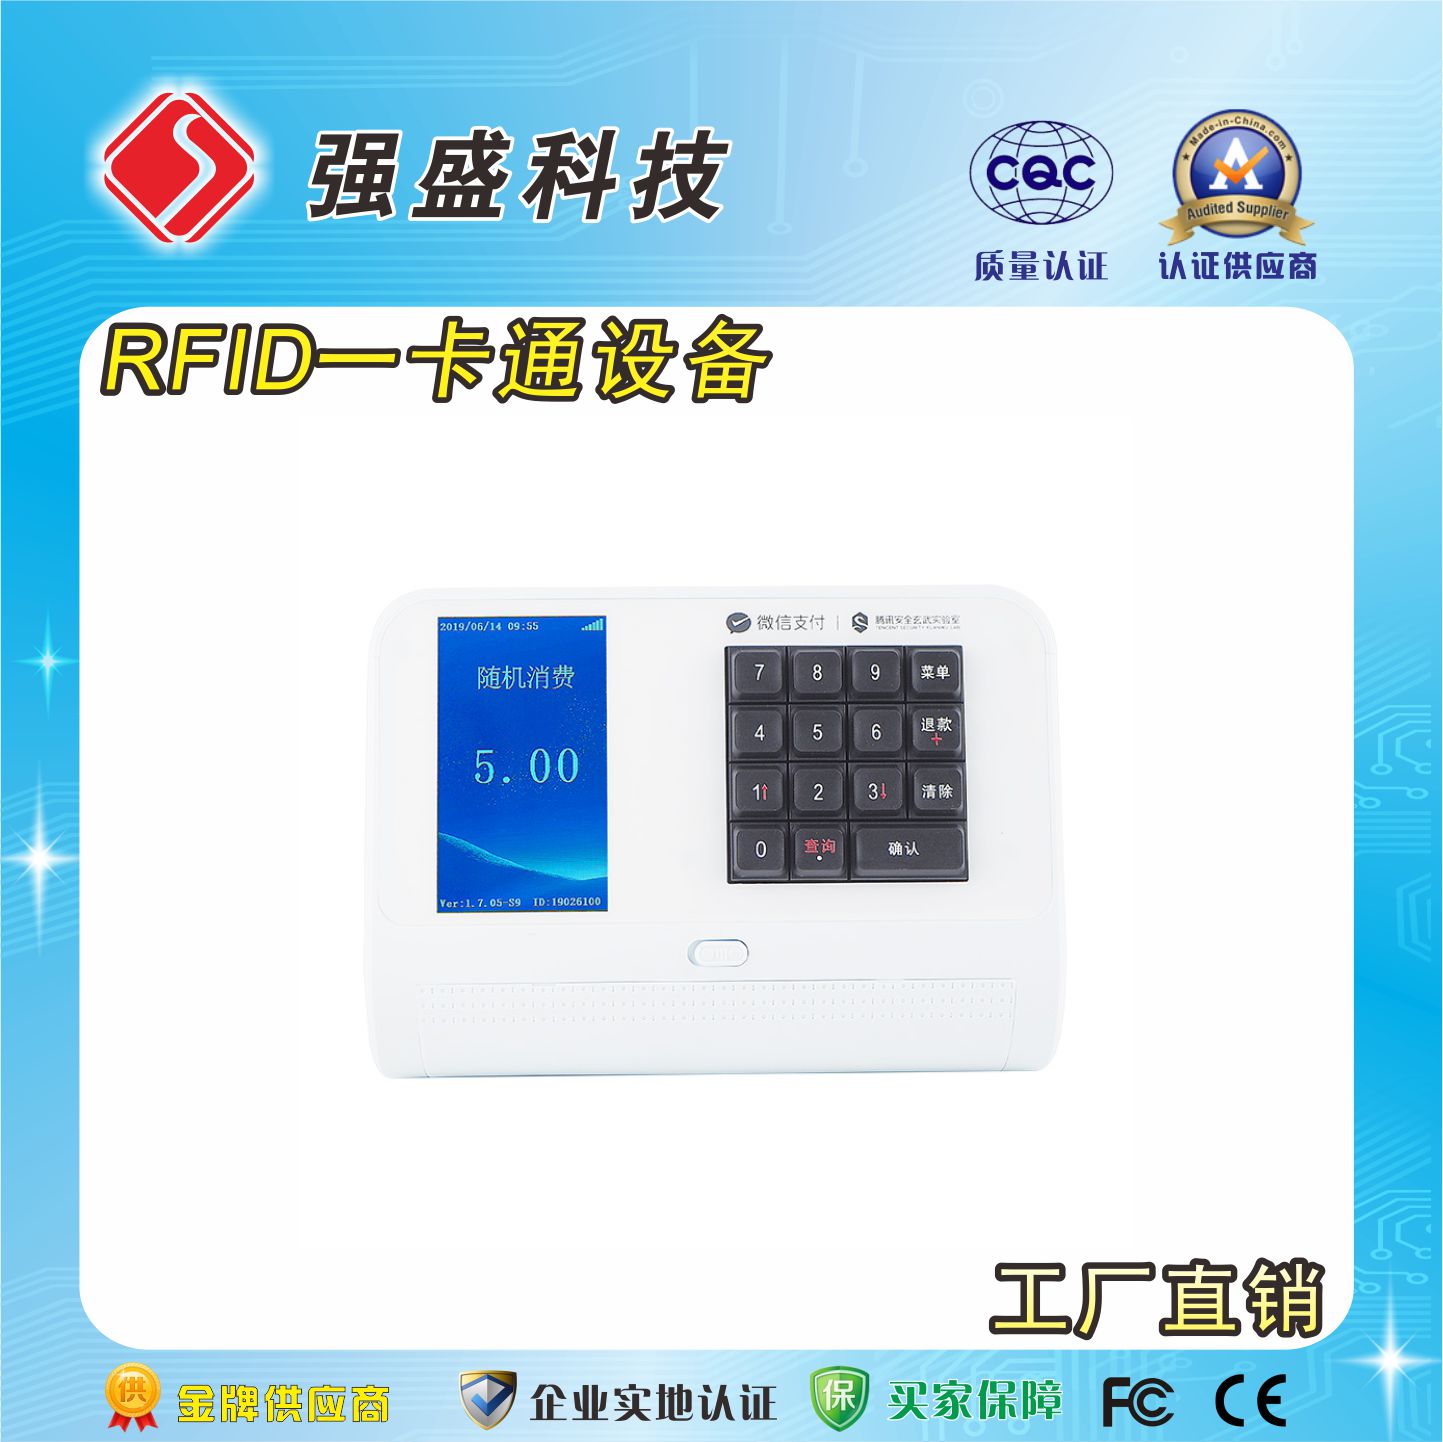 QS-OFS8 企业食堂消费机 一卡通管理系统 供应刷卡挂式云消费机3